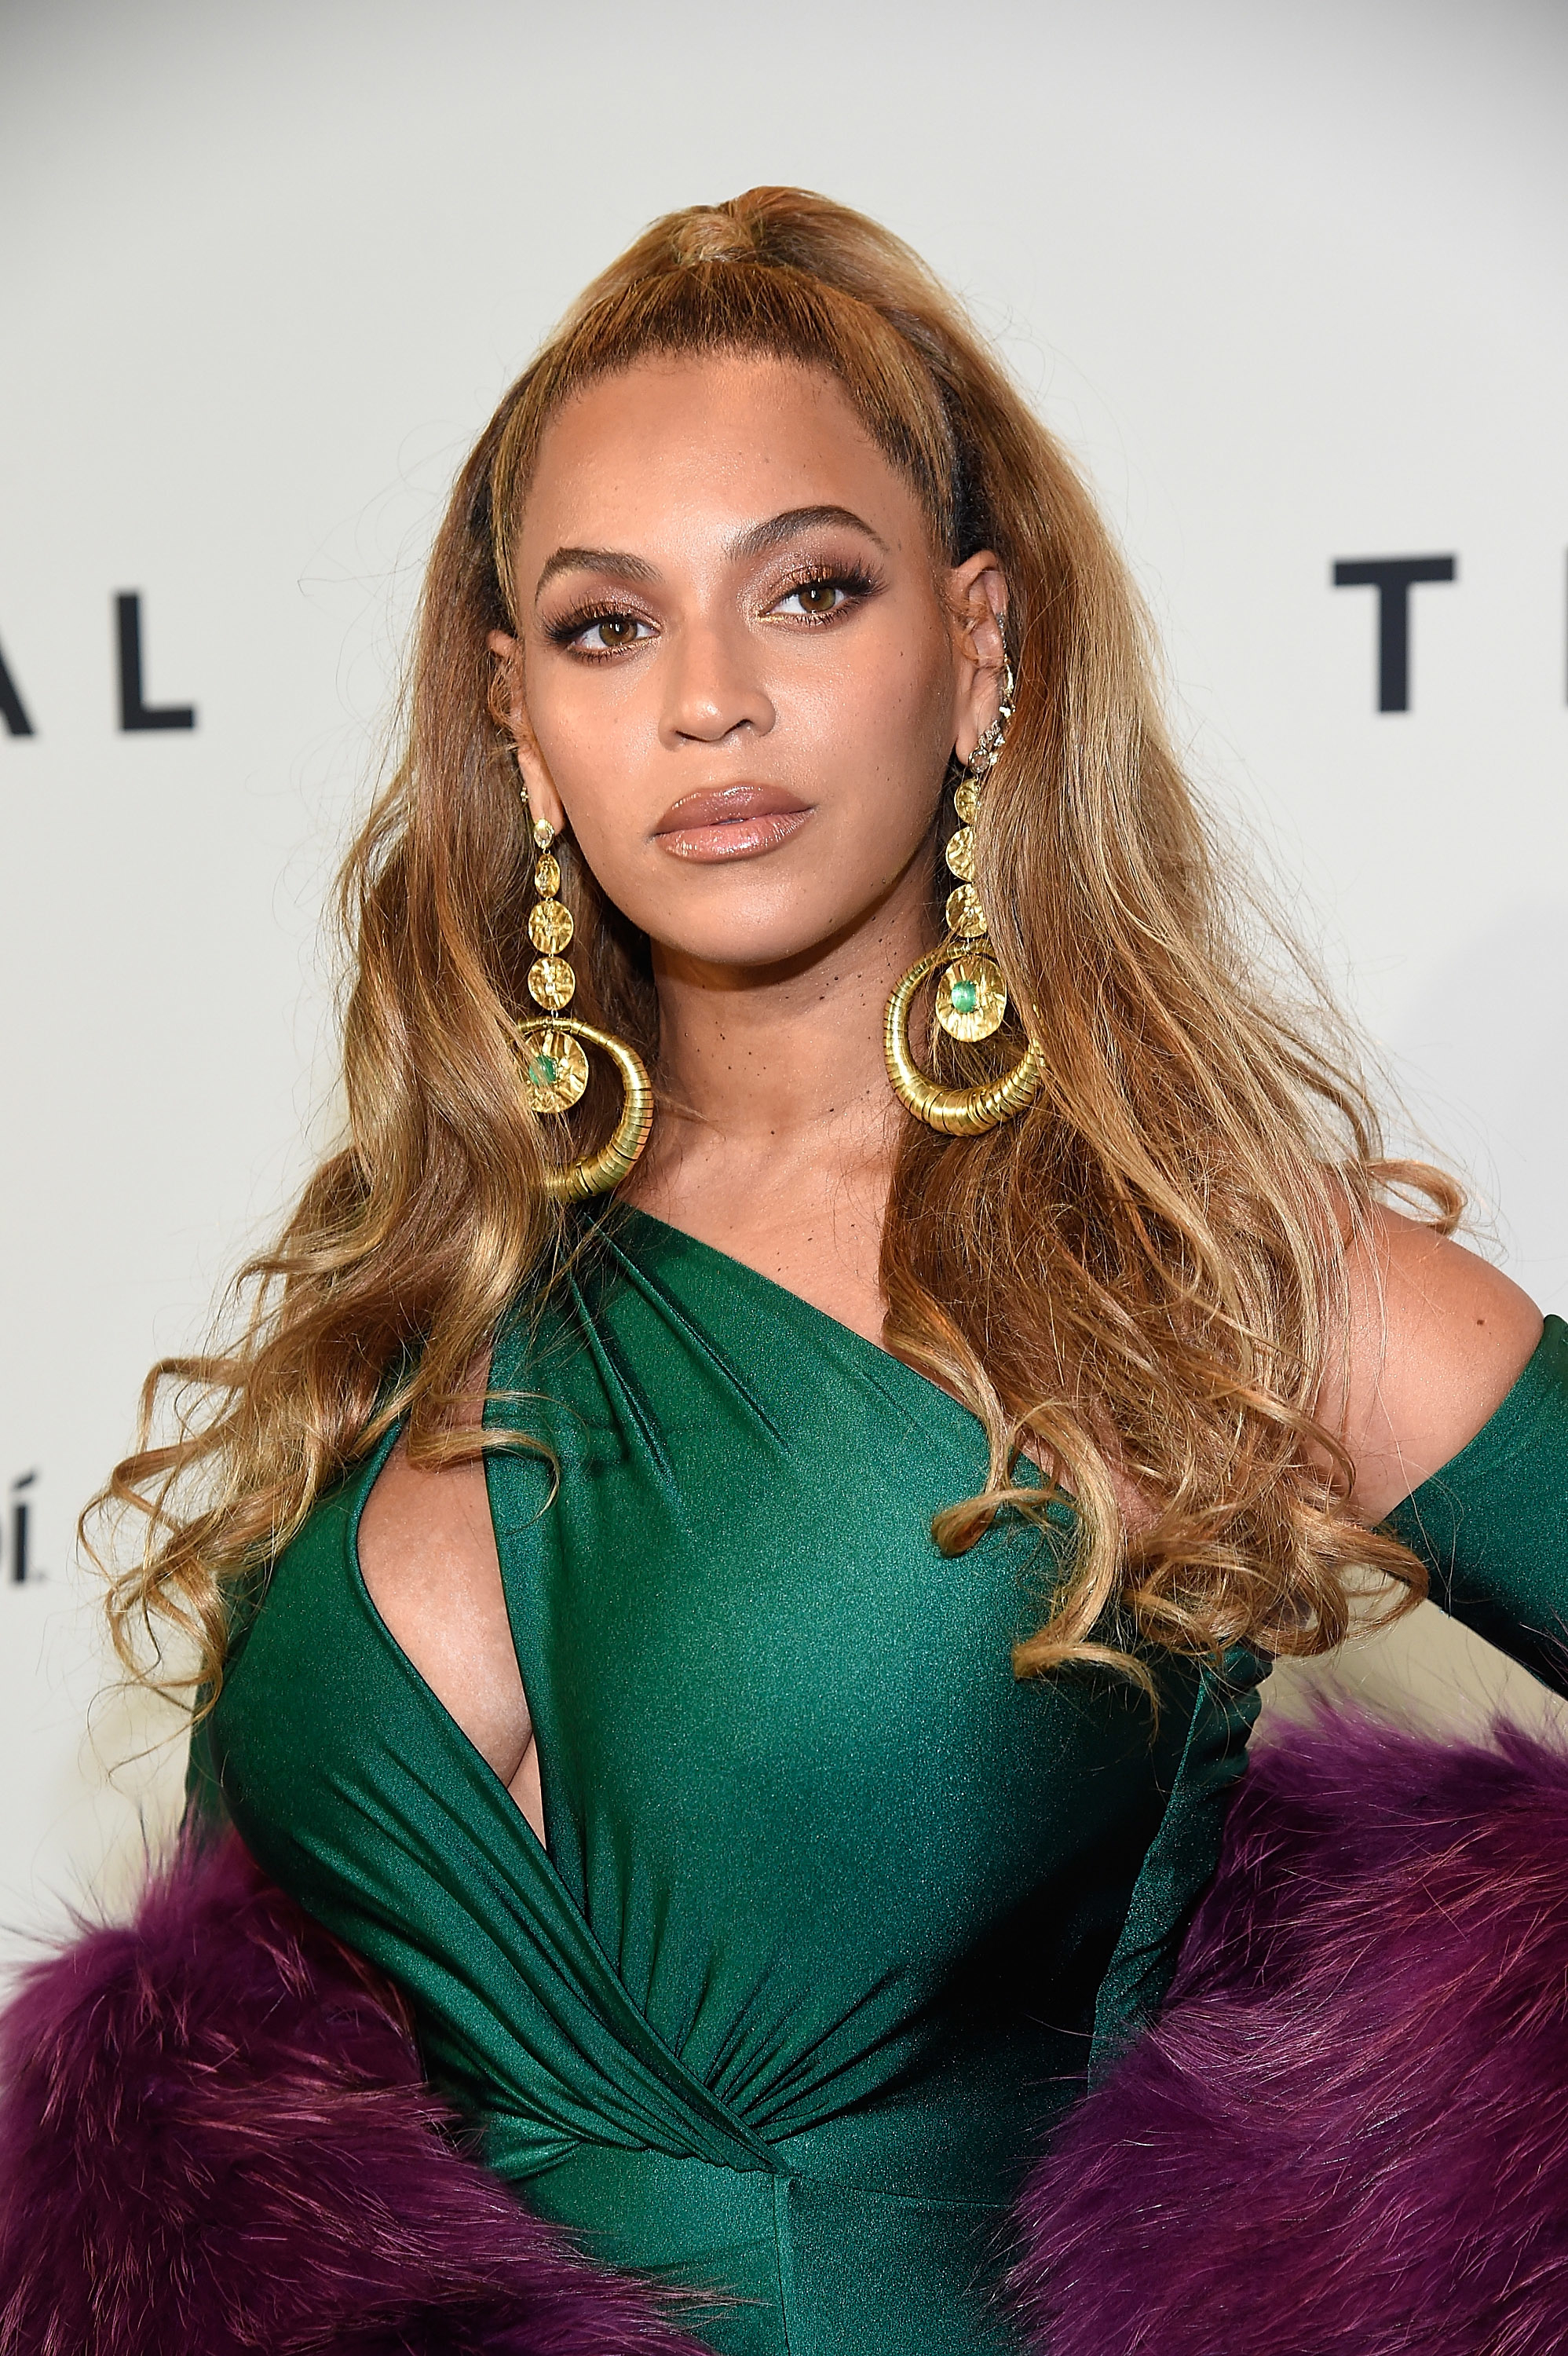 Close-up of Beyoncé at a media event